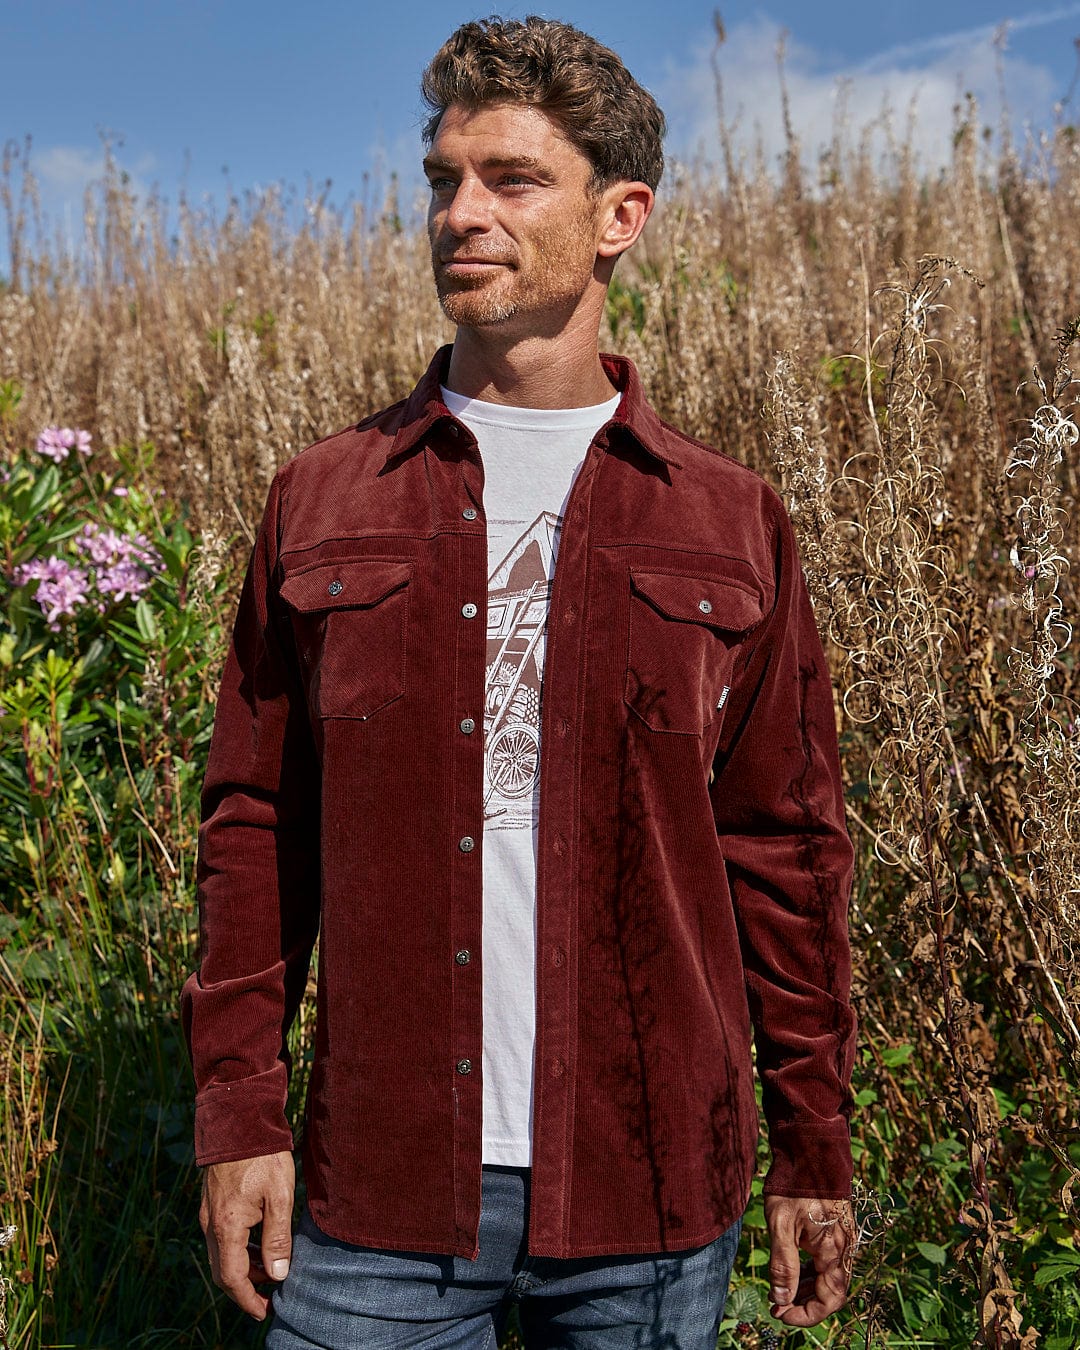 A man standing in a field wearing a Saltrock Linus - Mens Long Sleeve Shirt - Dark Red.